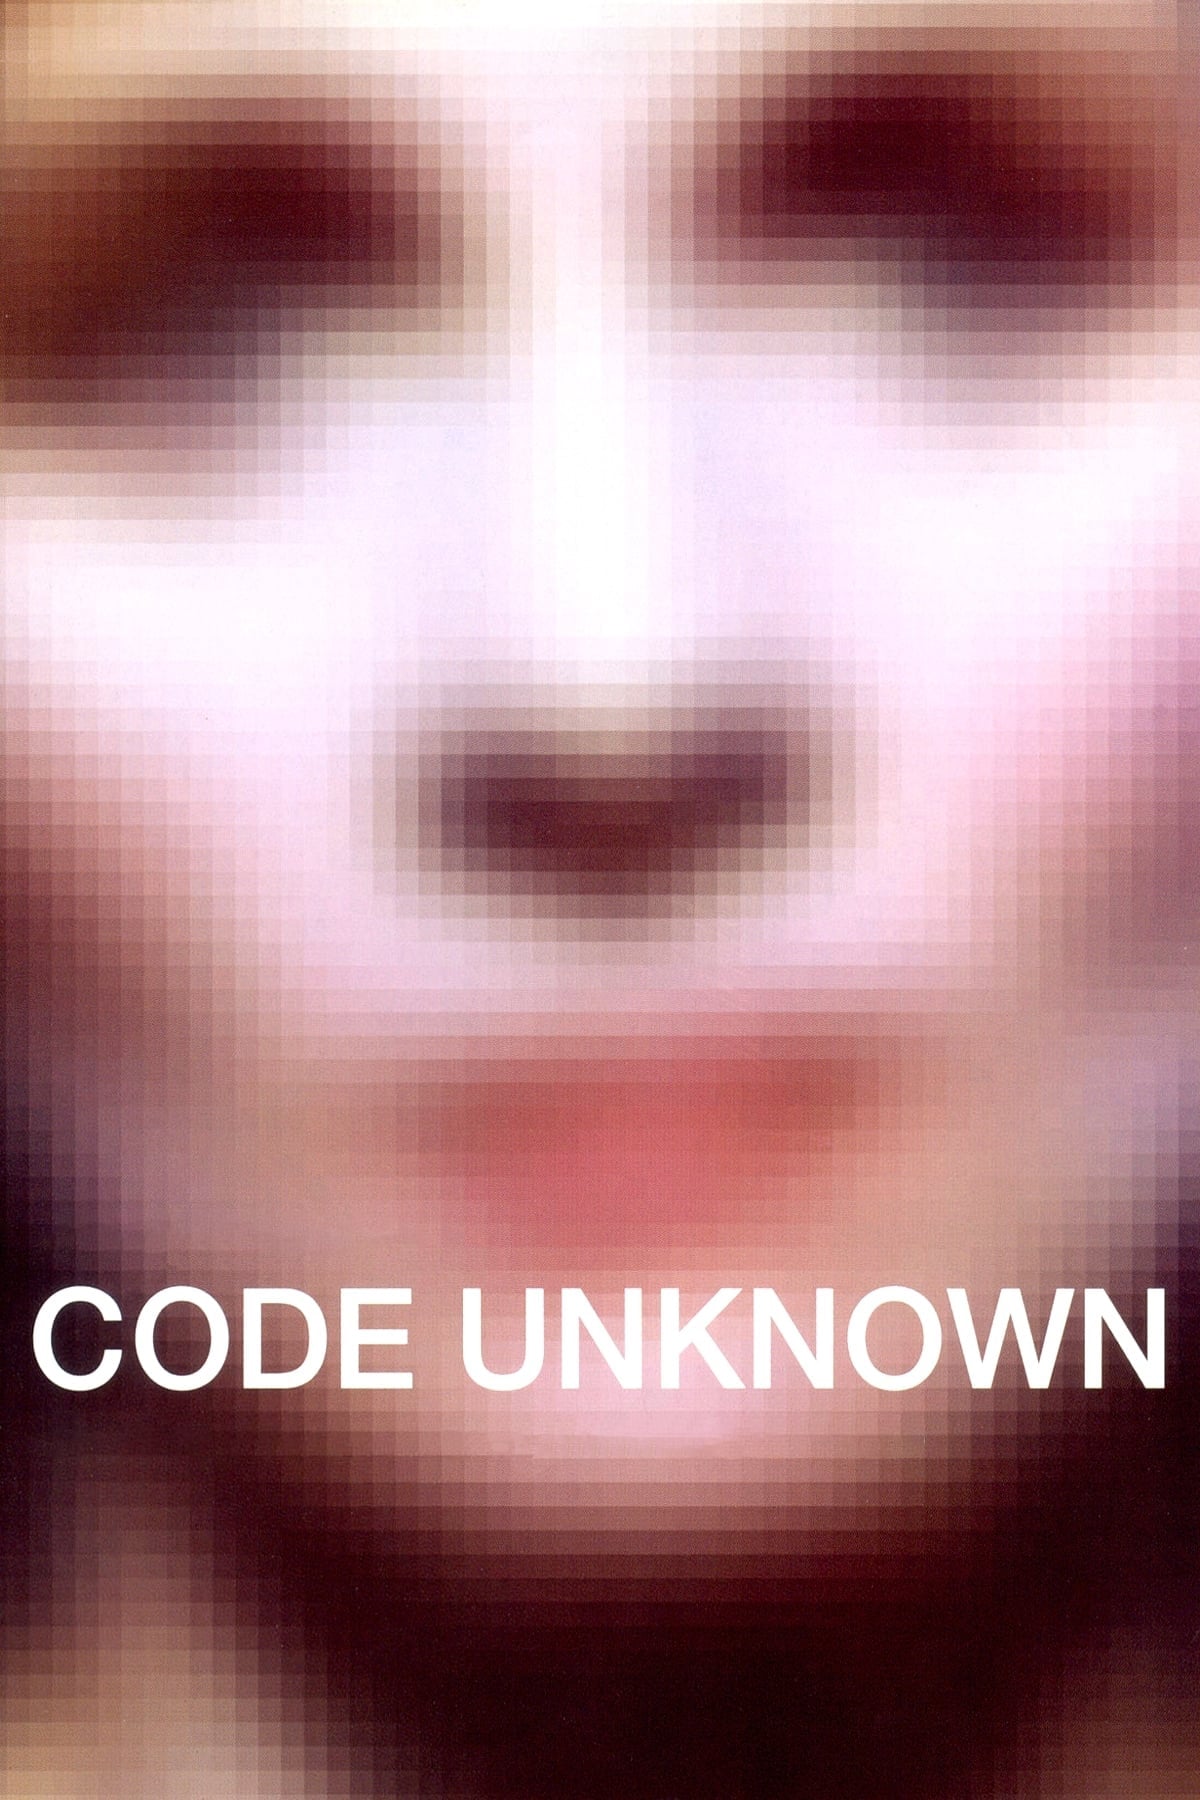 Código desconocido (2000)